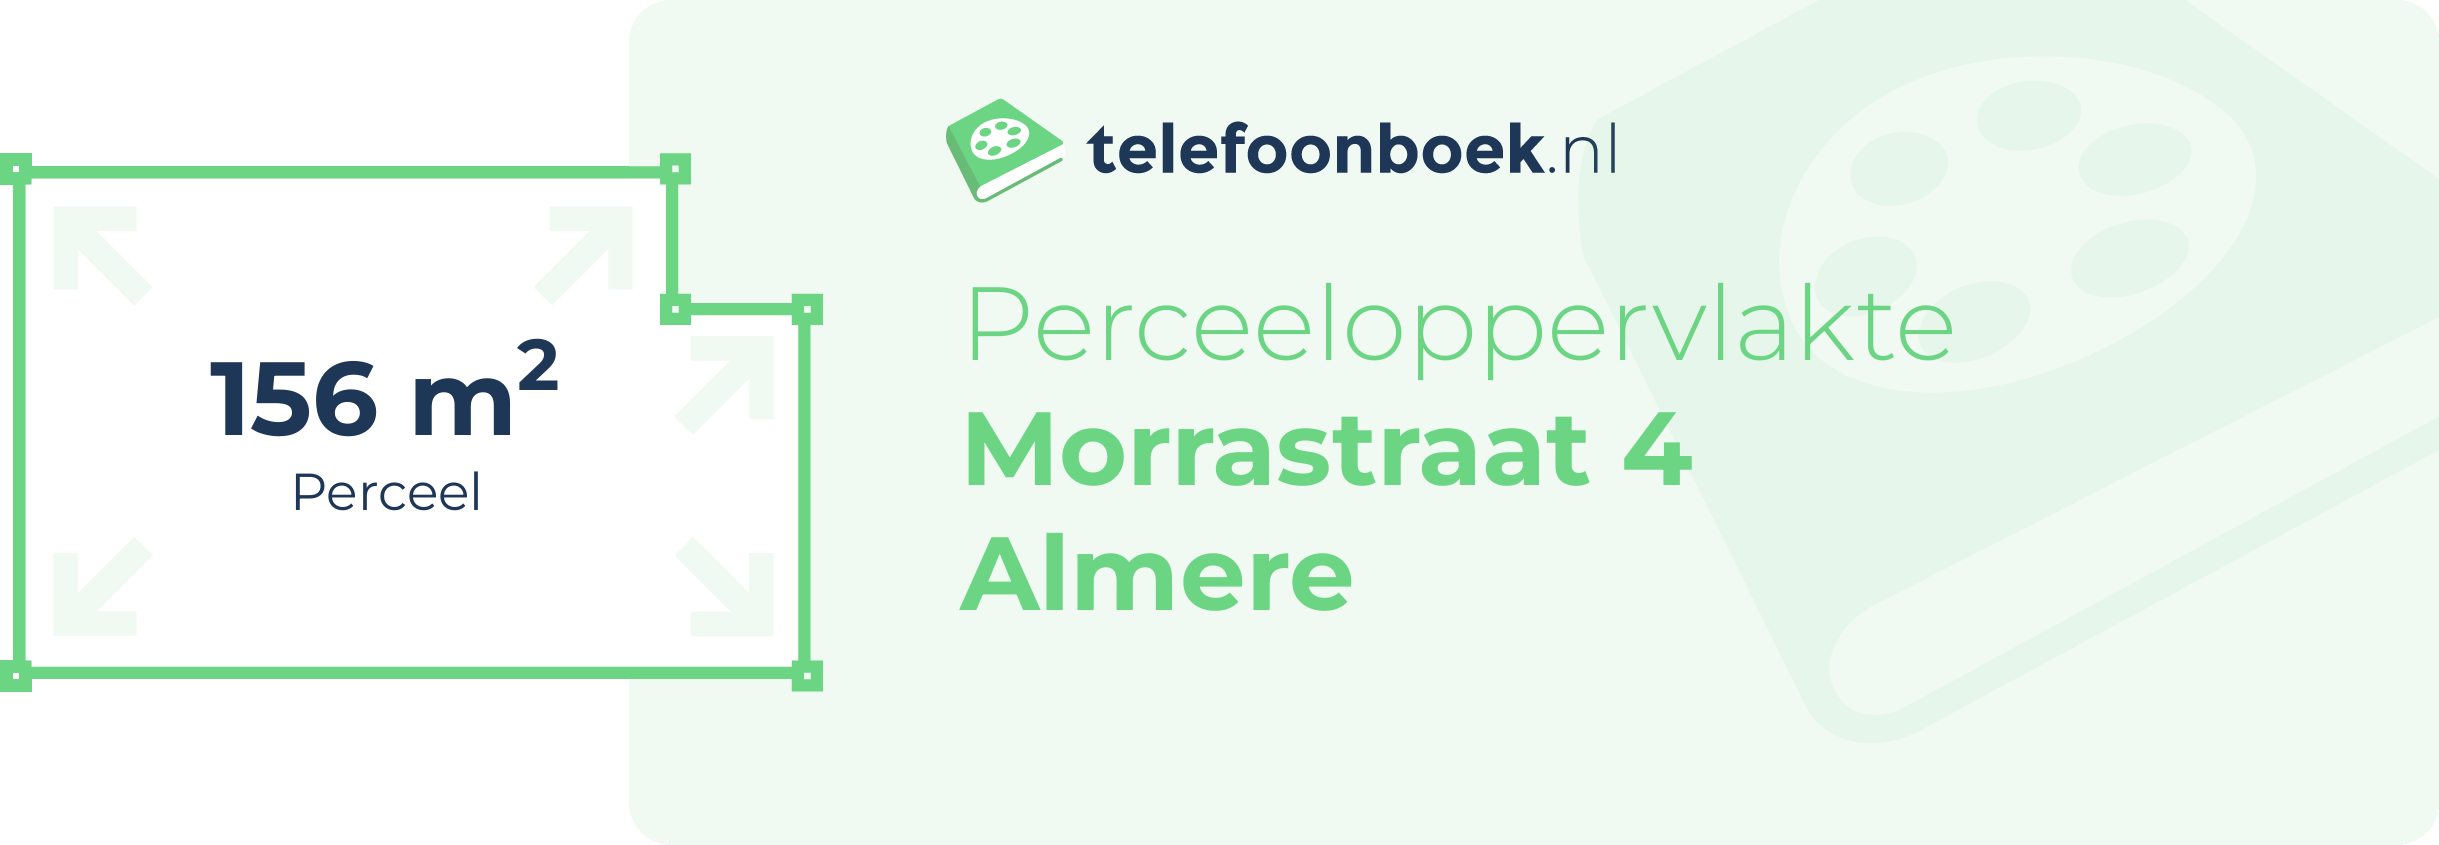 Perceeloppervlakte Morrastraat 4 Almere